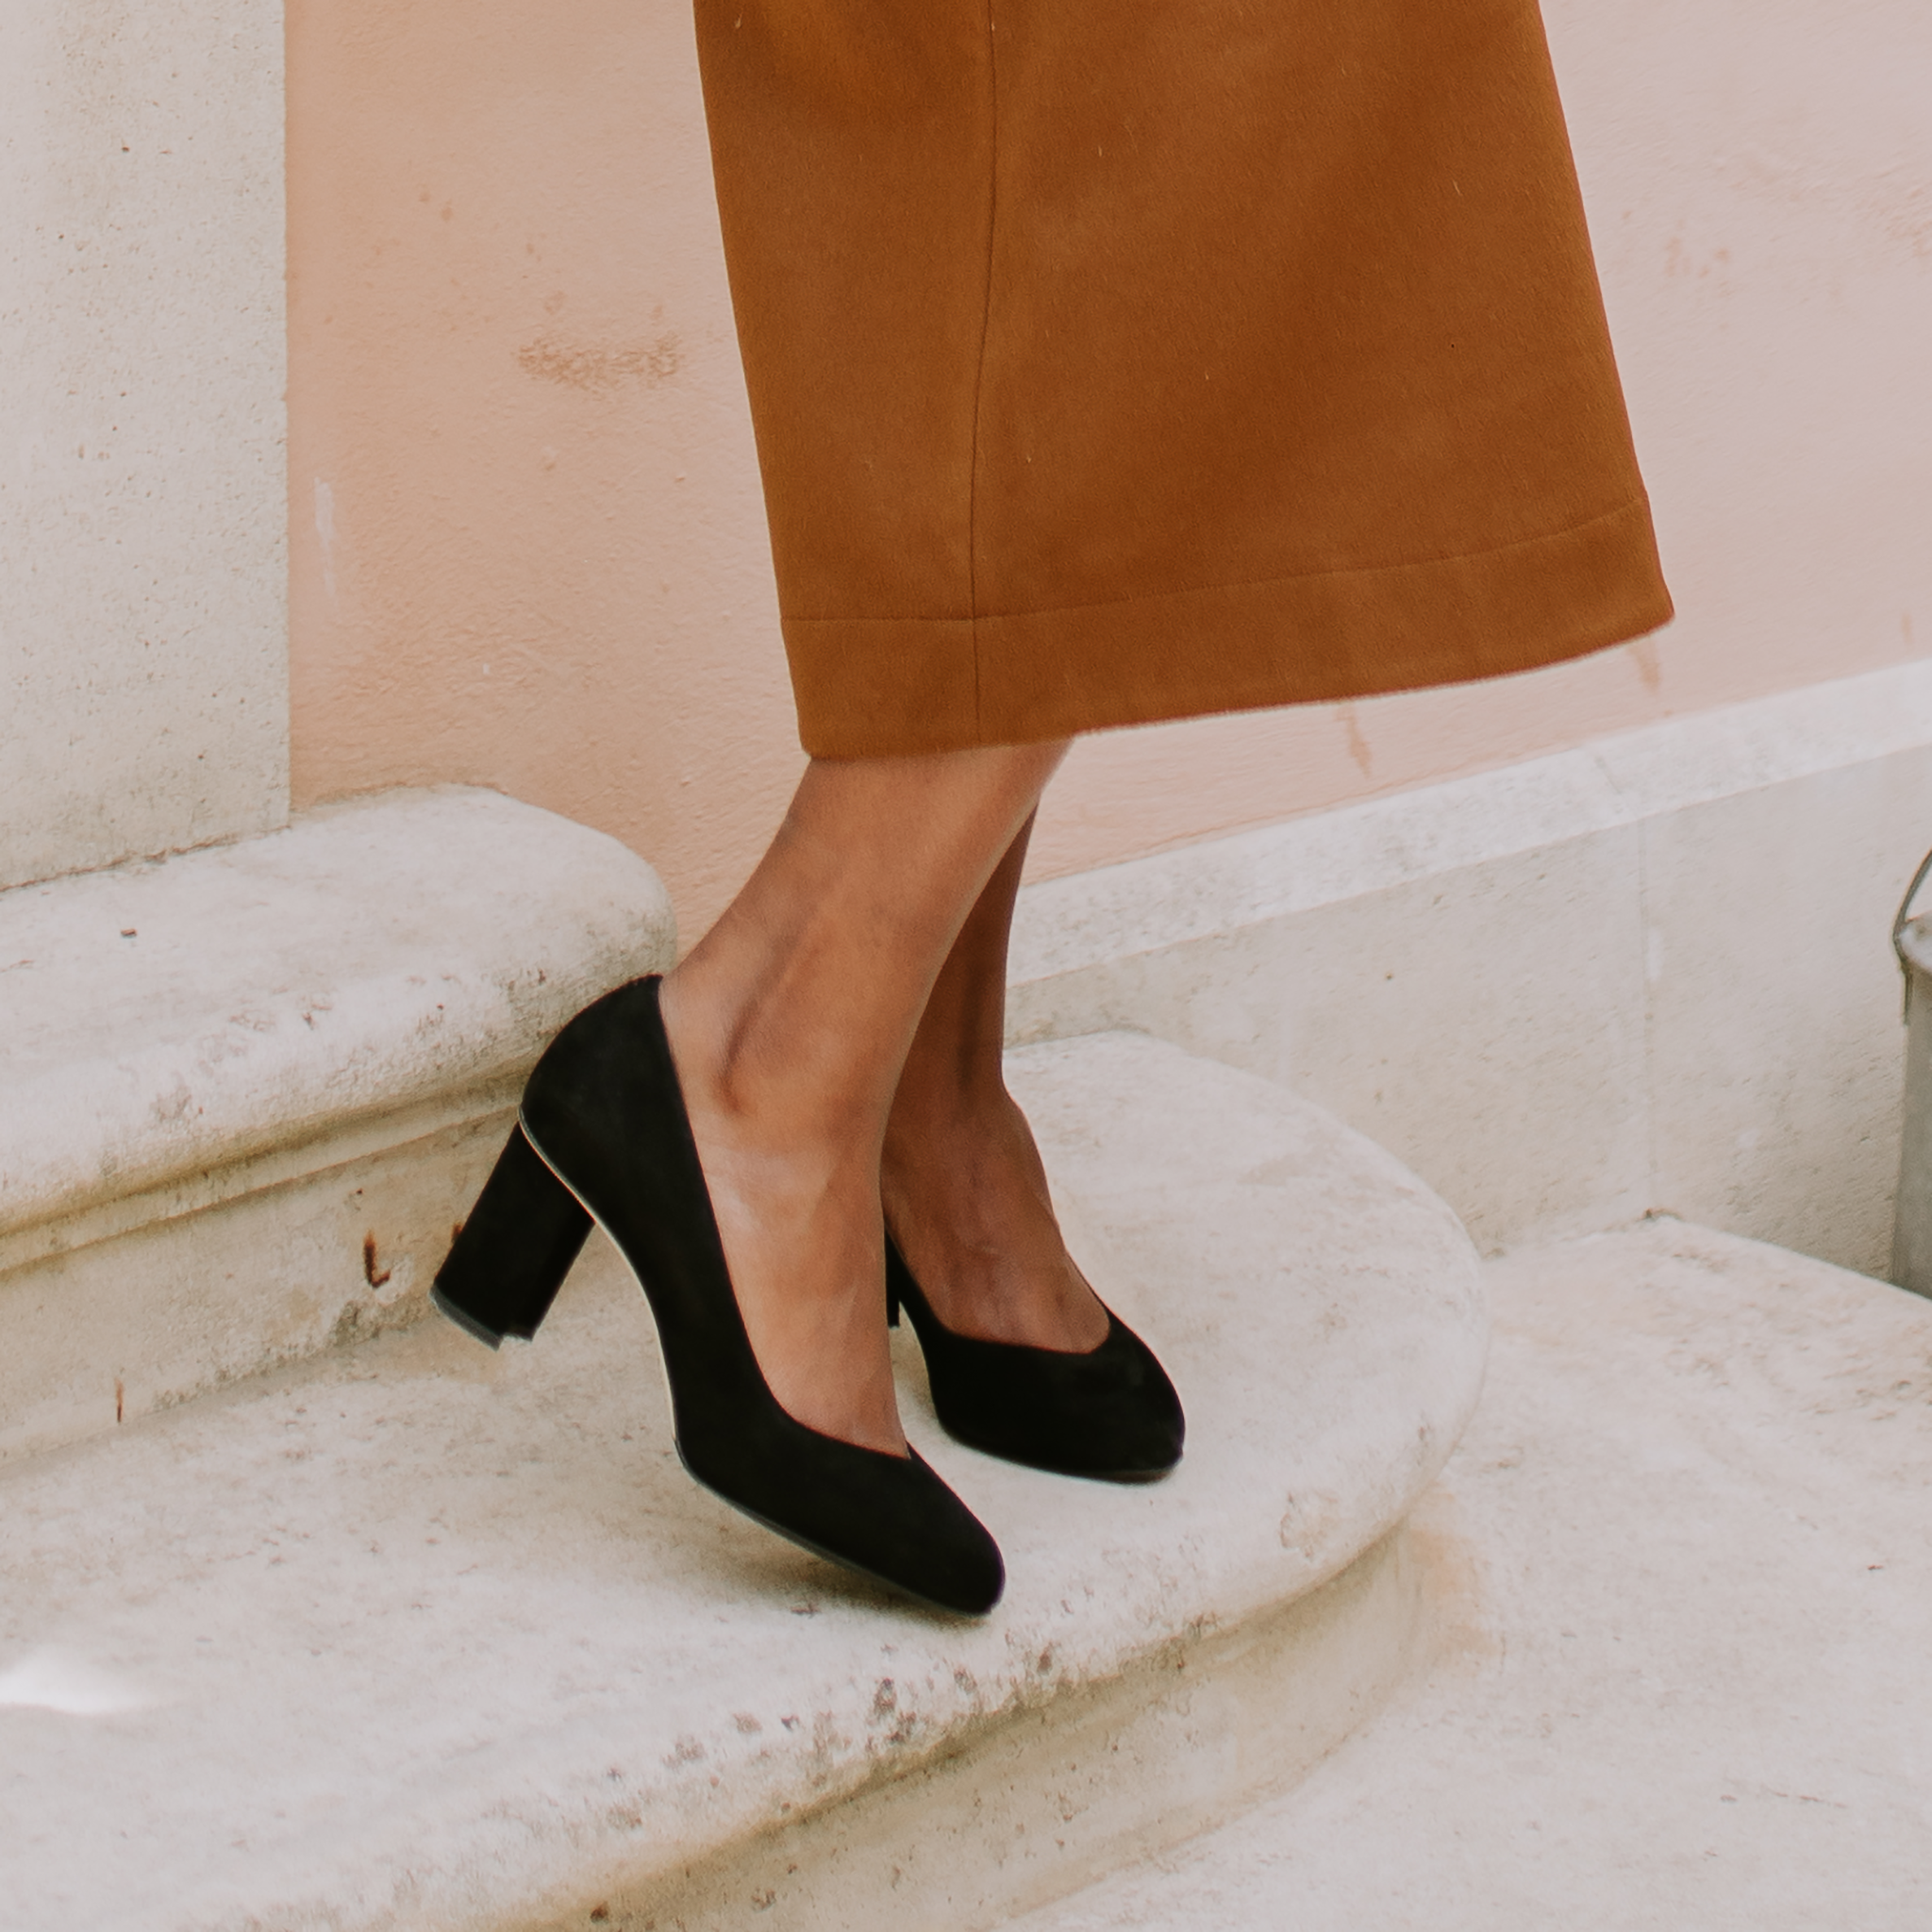 Classy Pure Black Round Toe High Heels Fashion Shoes | Shoes heels classy,  Heels, Fashion high heels